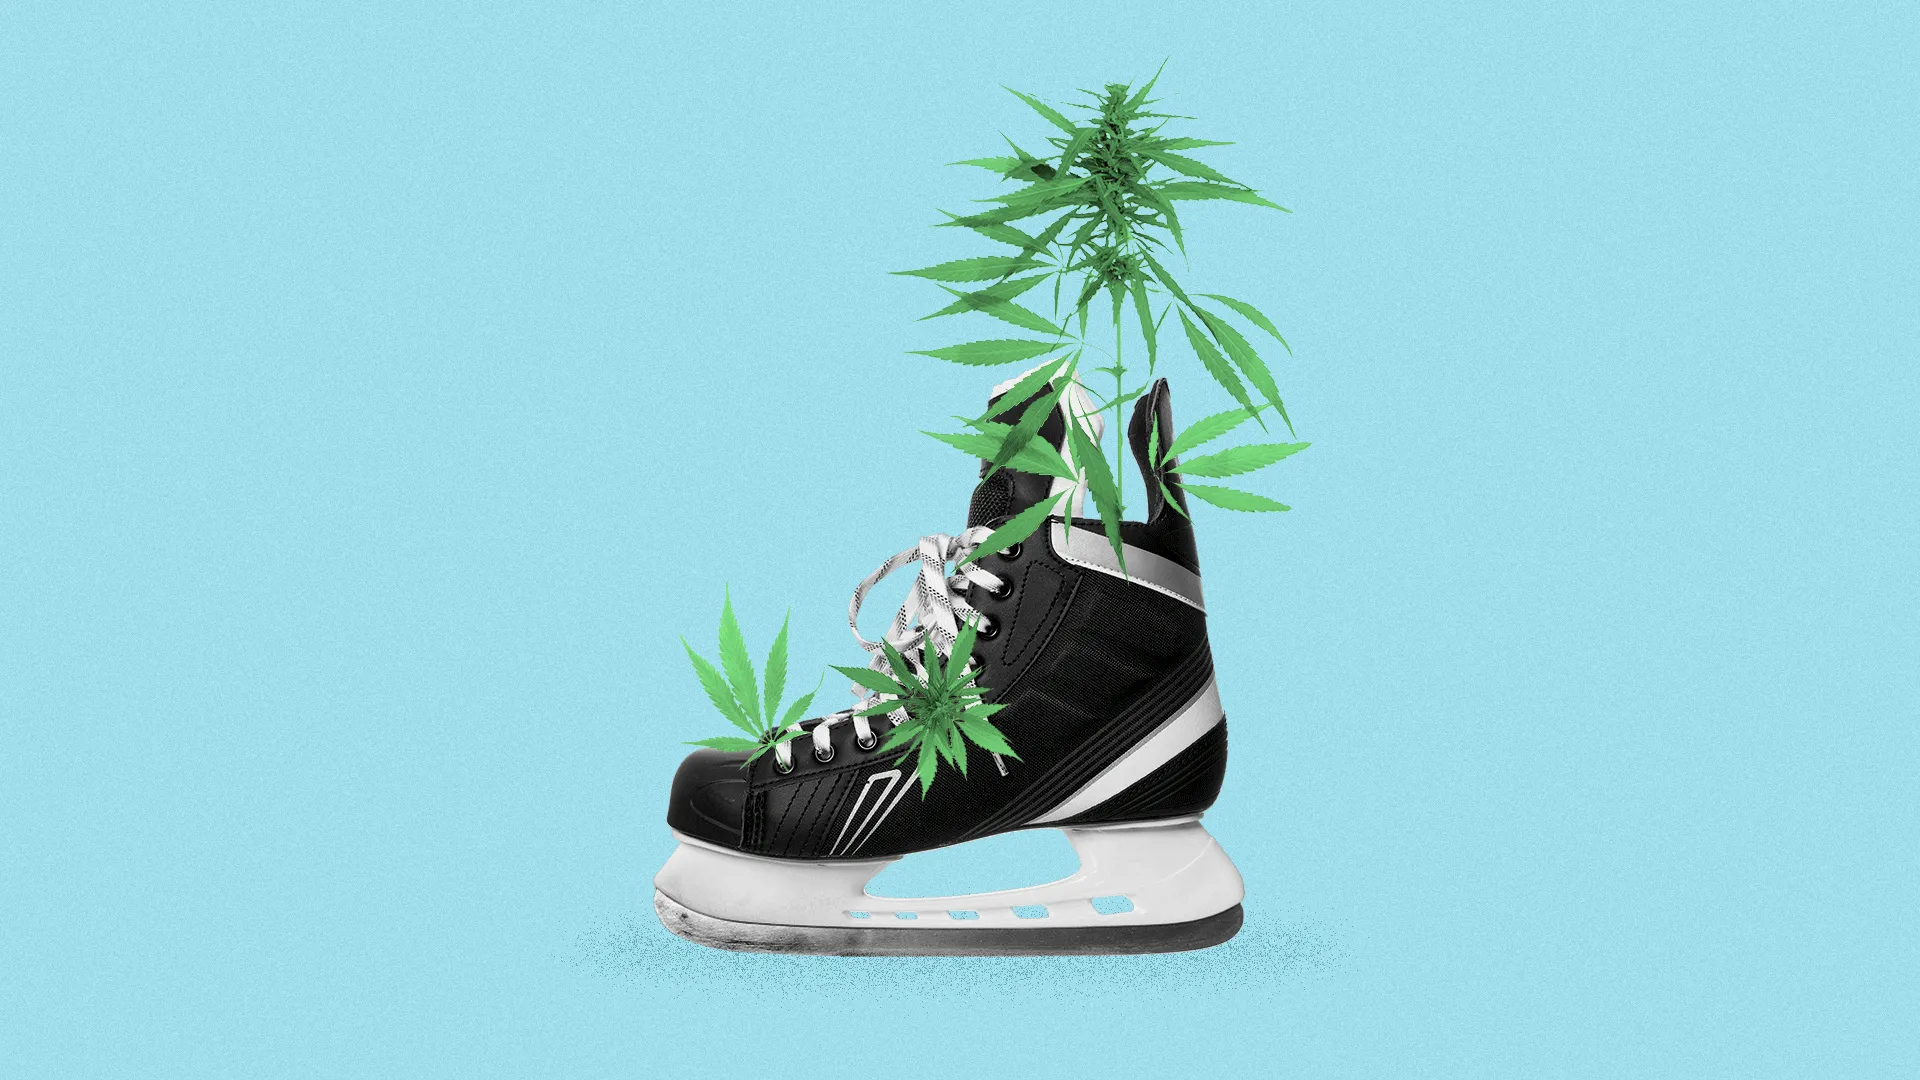 Cannabis in ice hockey boot